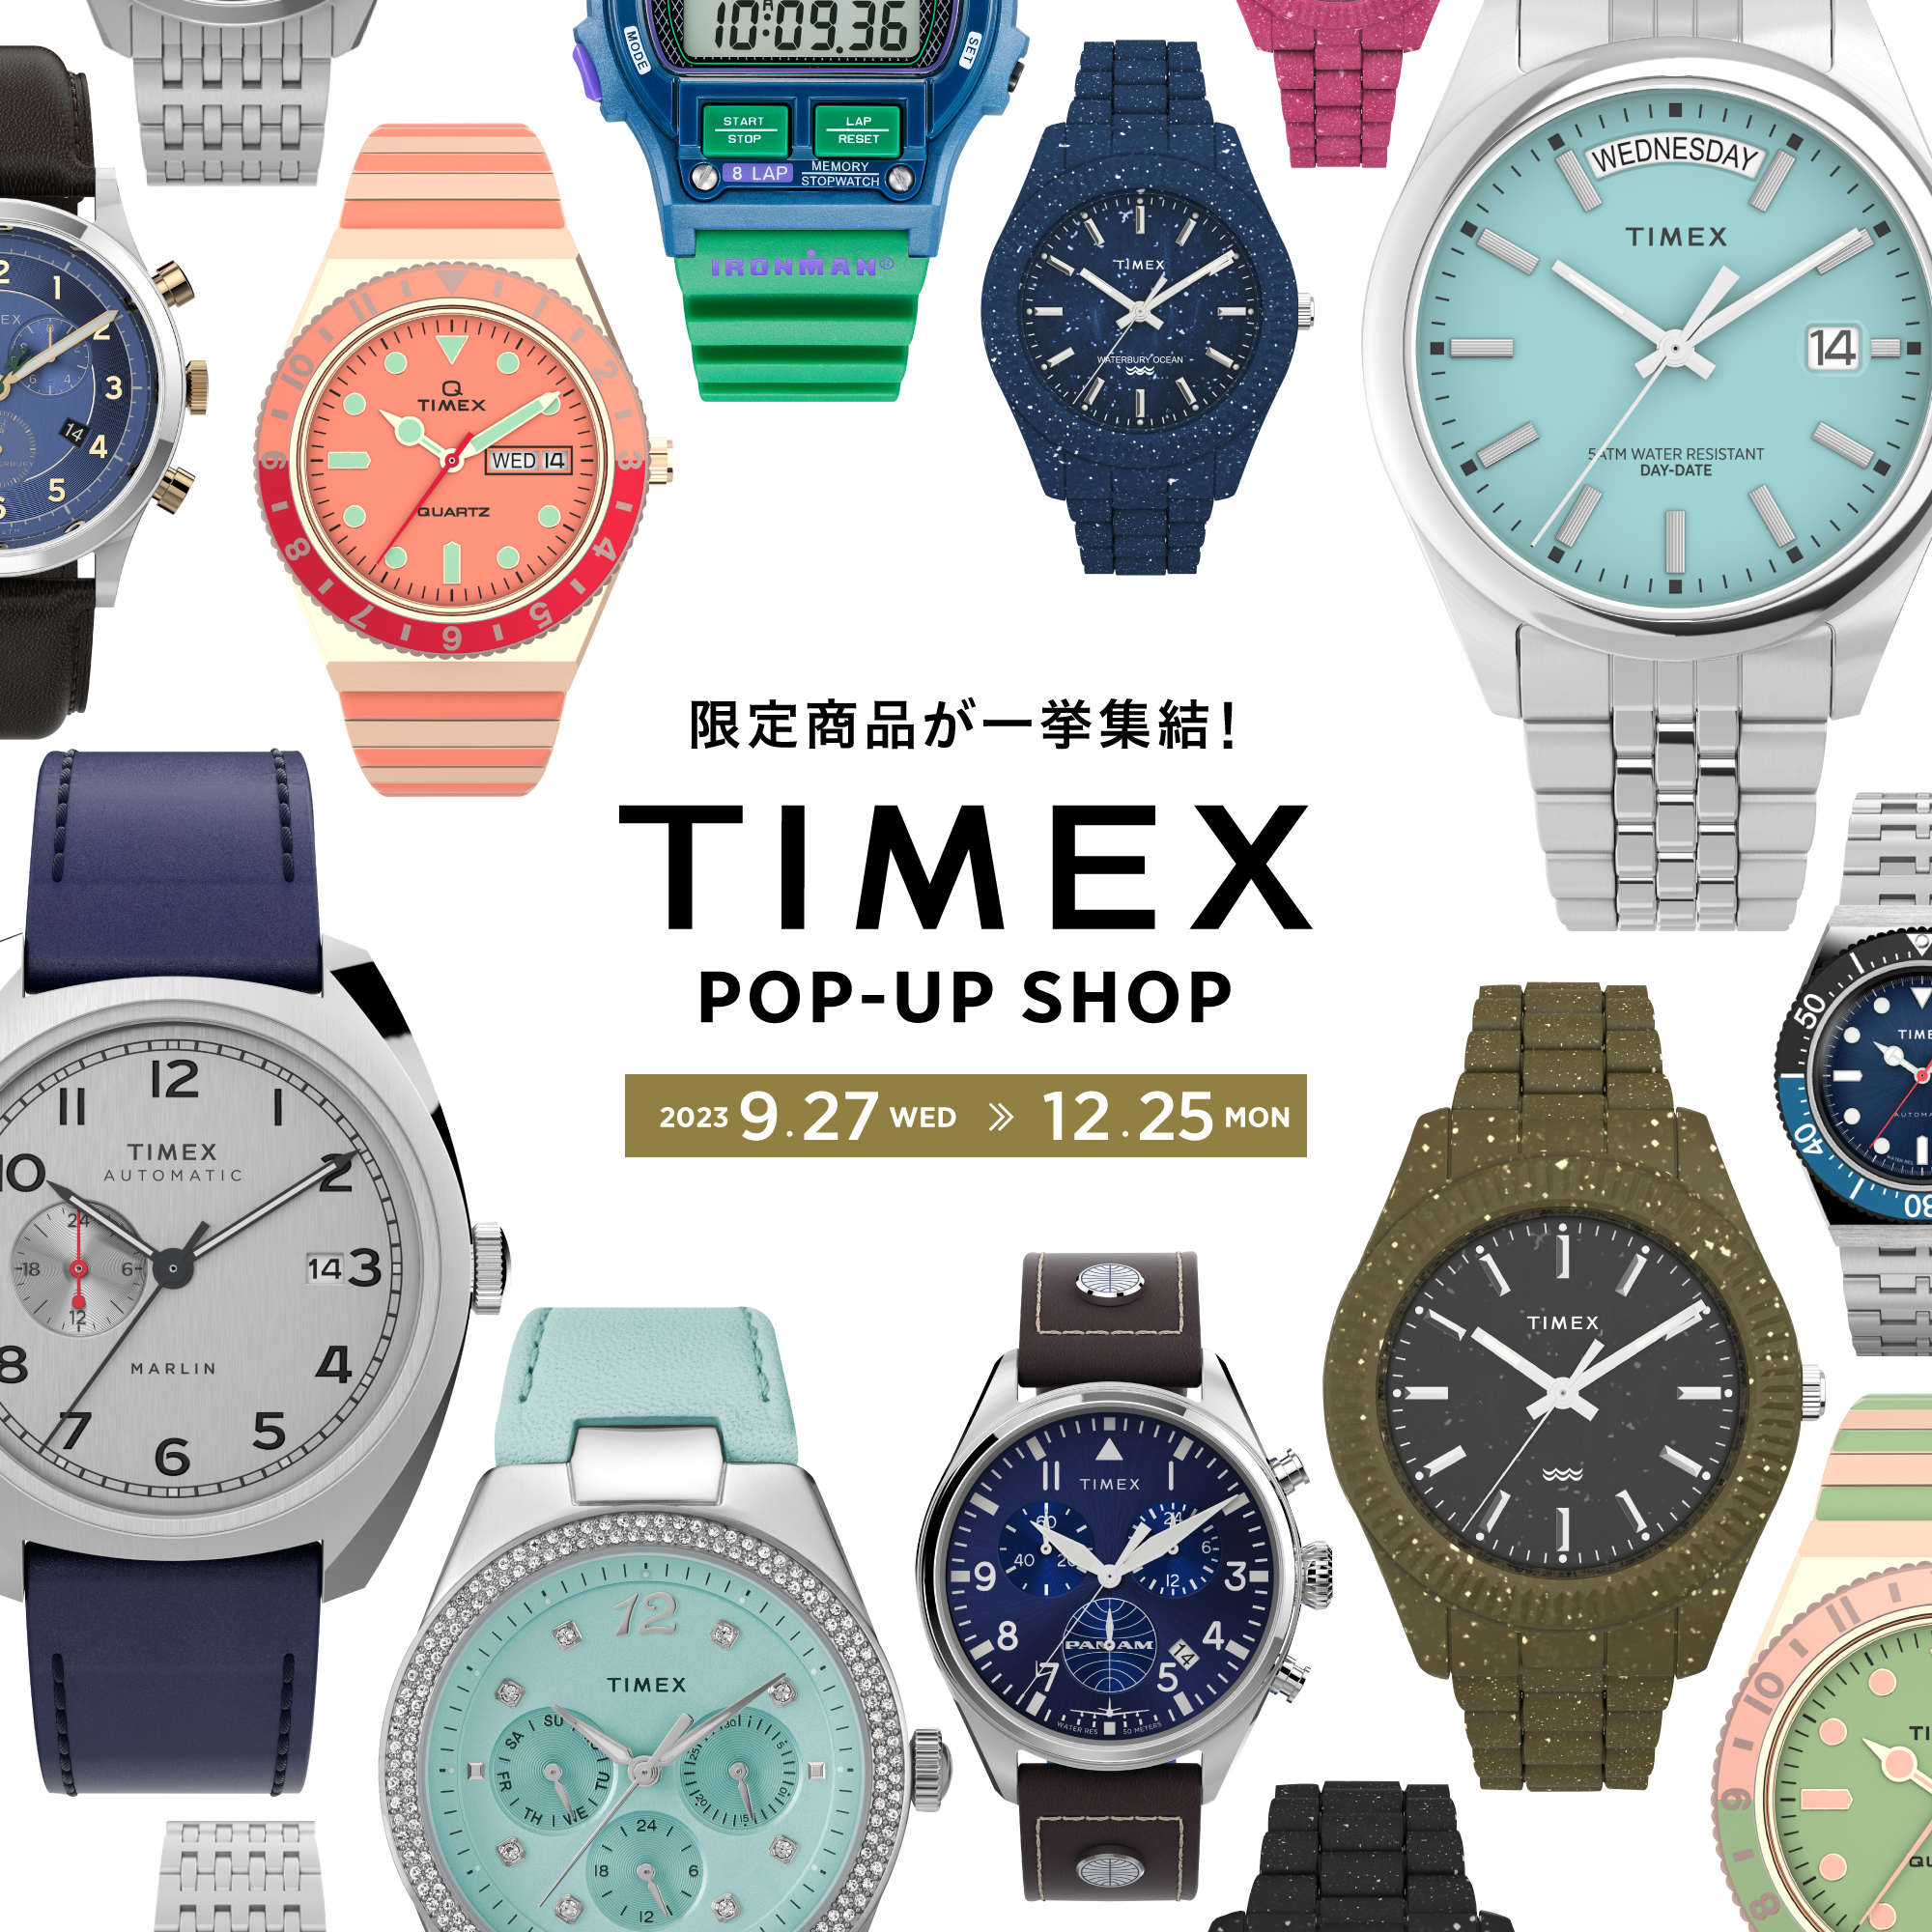 TIMEX Watch